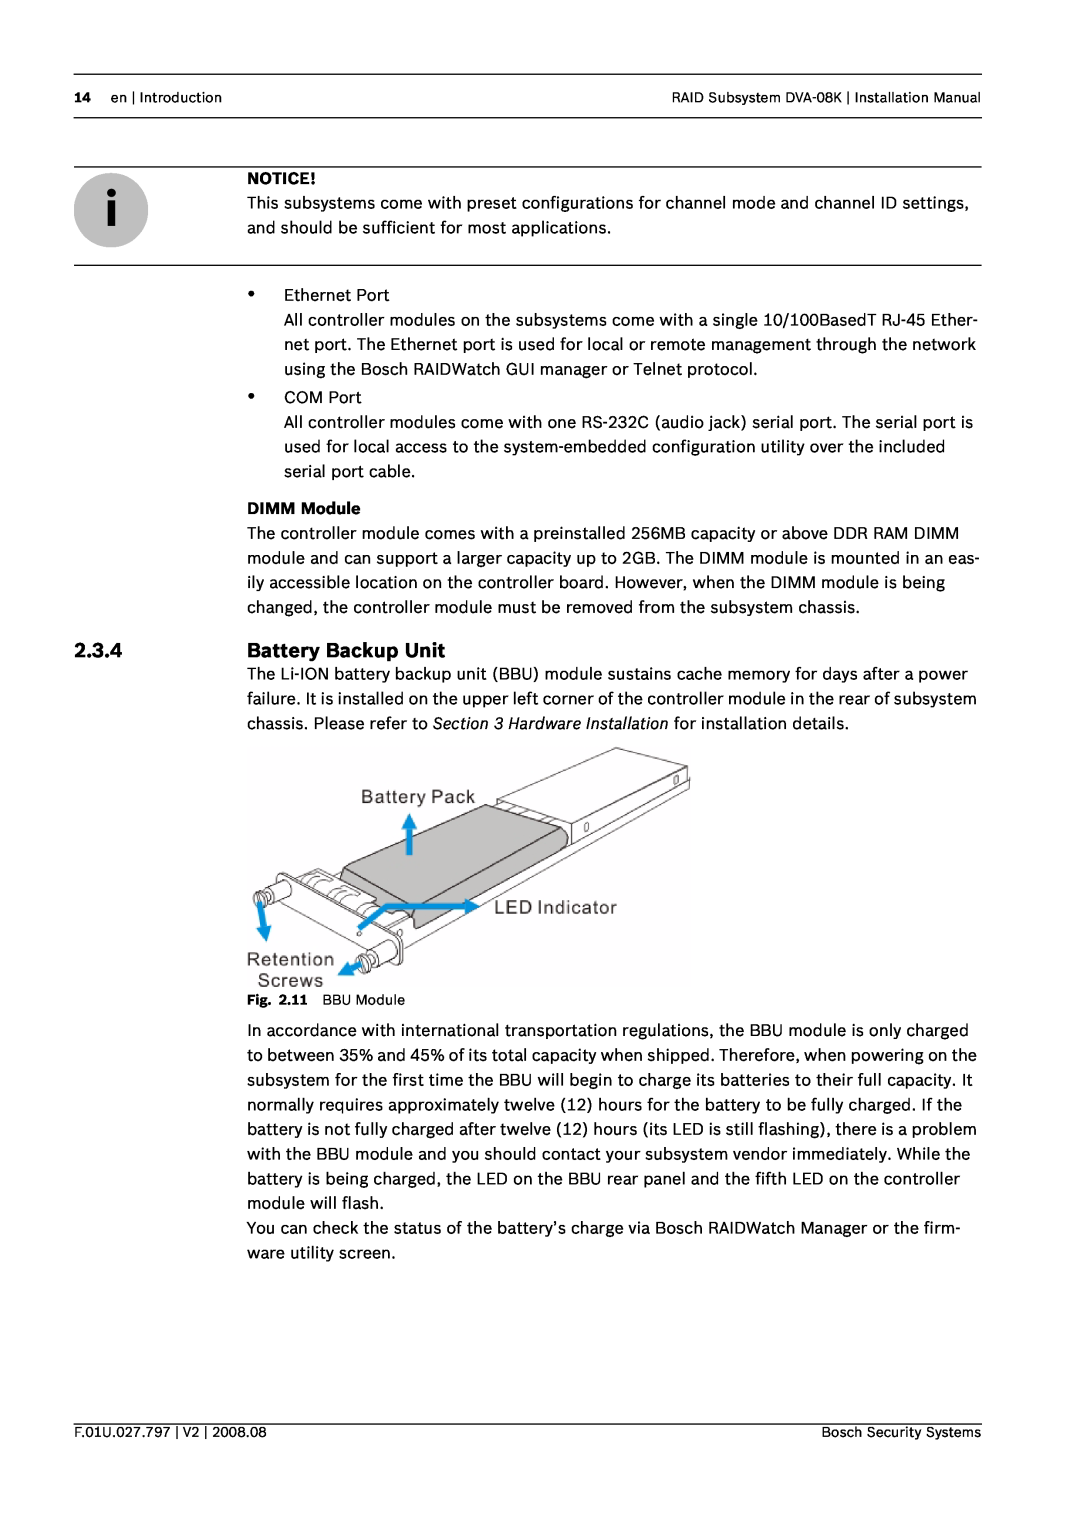 Bosch Appliances DVA-08K manual 2.3.4Battery Backup Unit, DIMM Module 